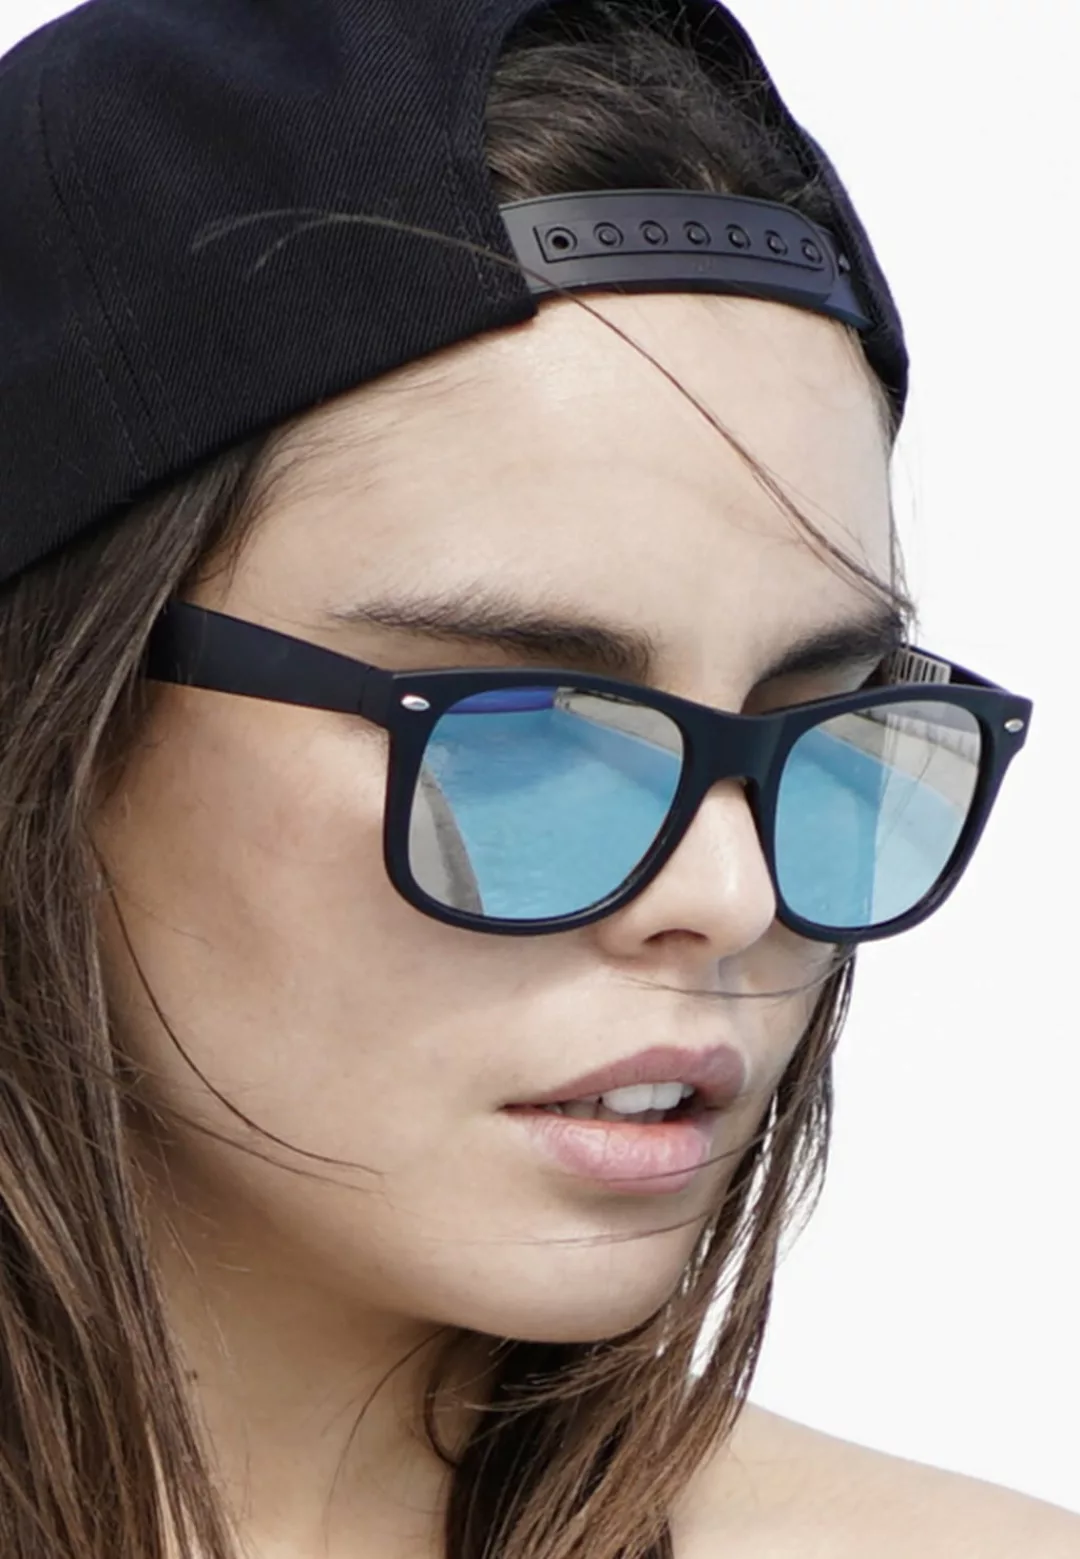 MSTRDS Sonnenbrille "Accessoires Sunglasses Likoma Youth" günstig online kaufen